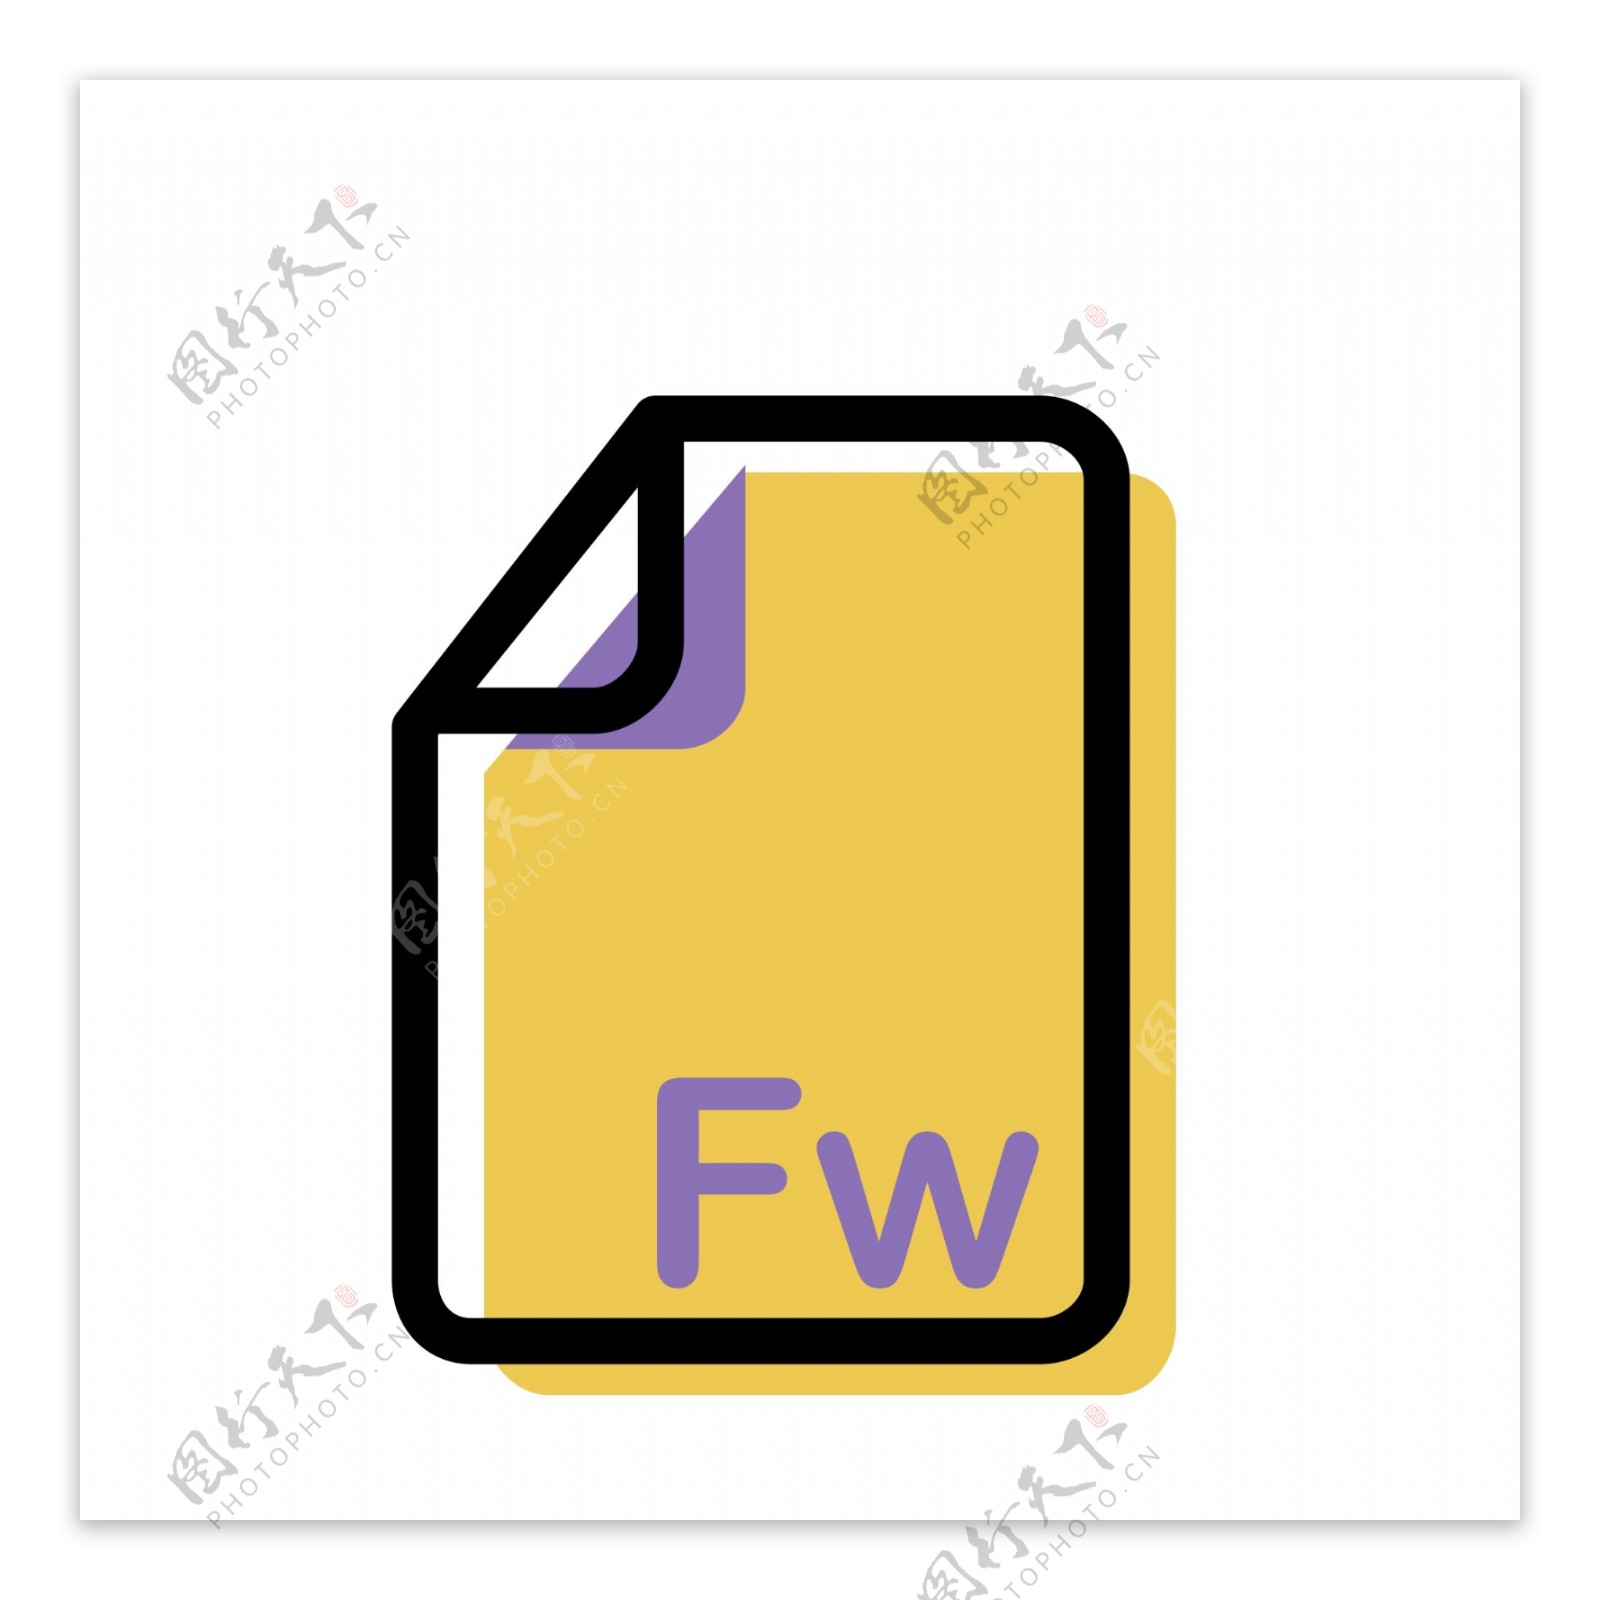 FW格式文件图标免抠图